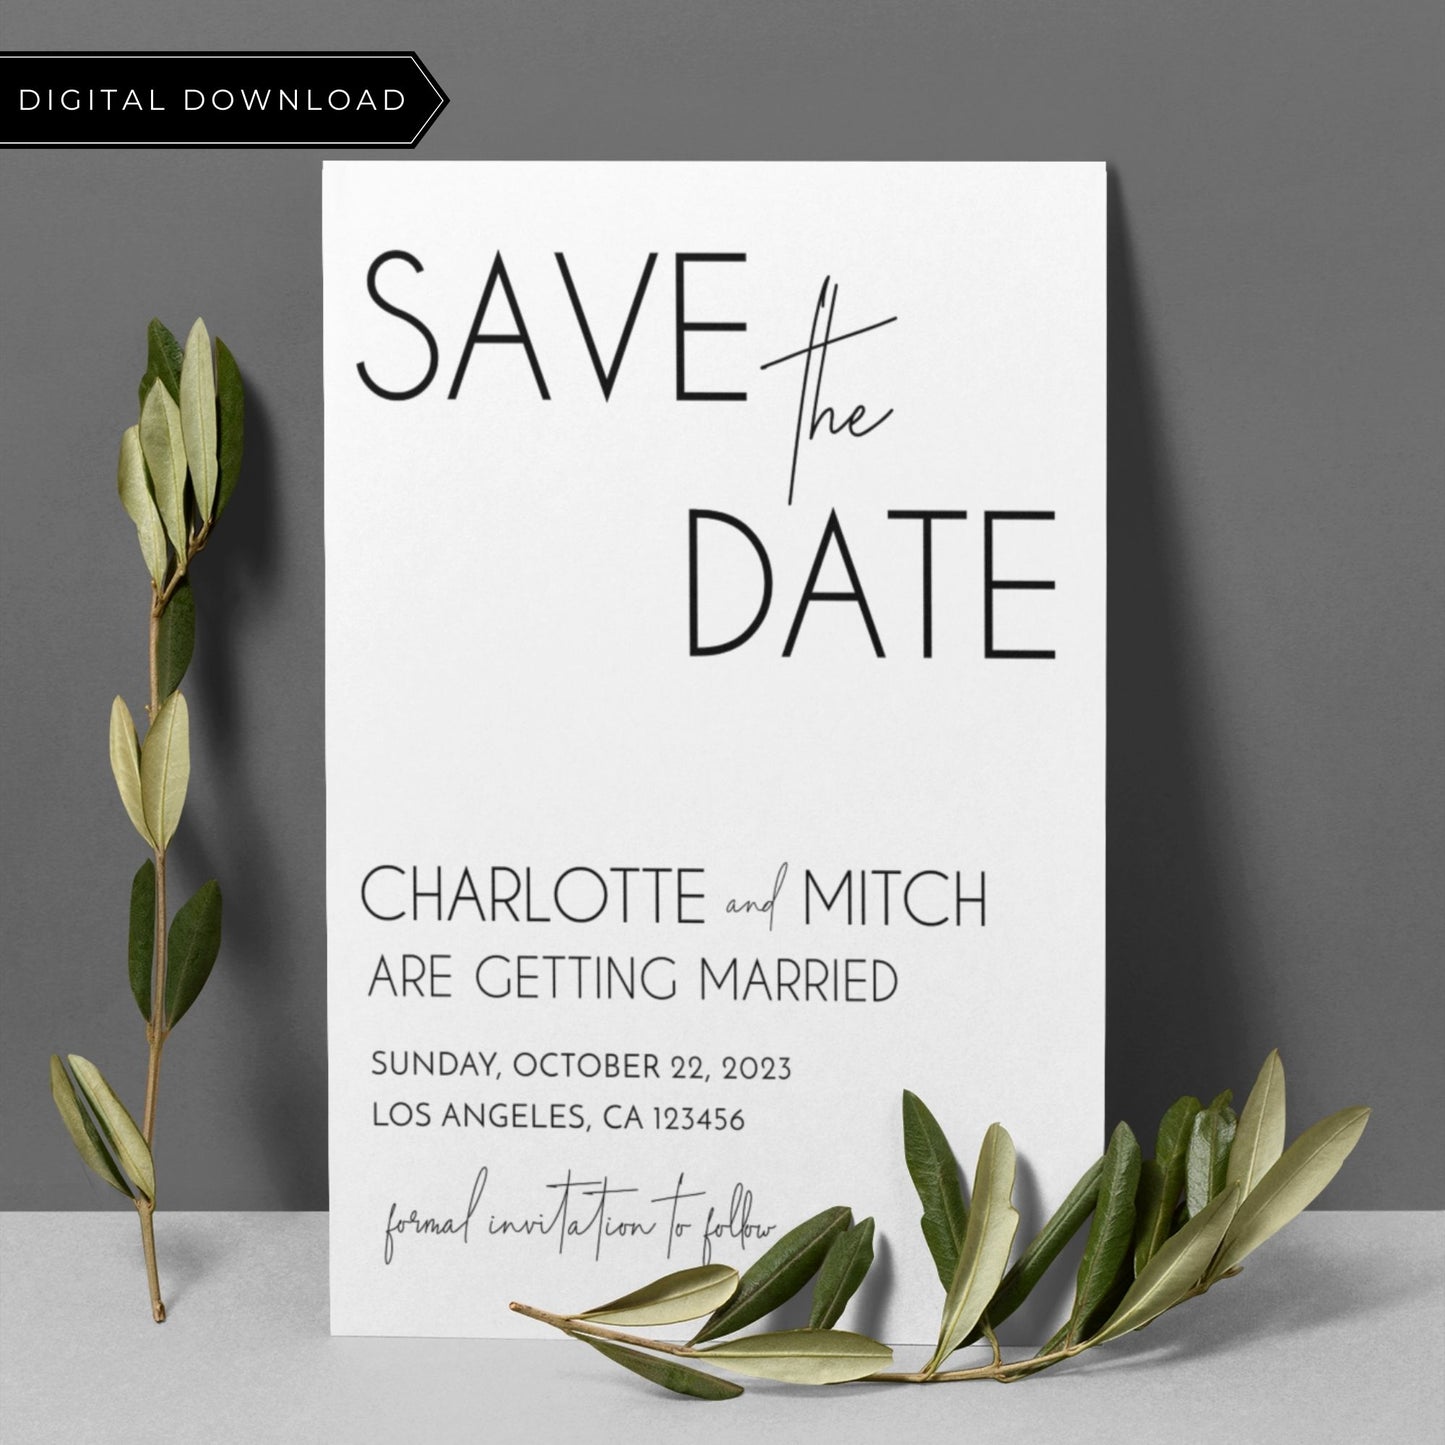 Minimalist Save the Date Invitation Template 5x7